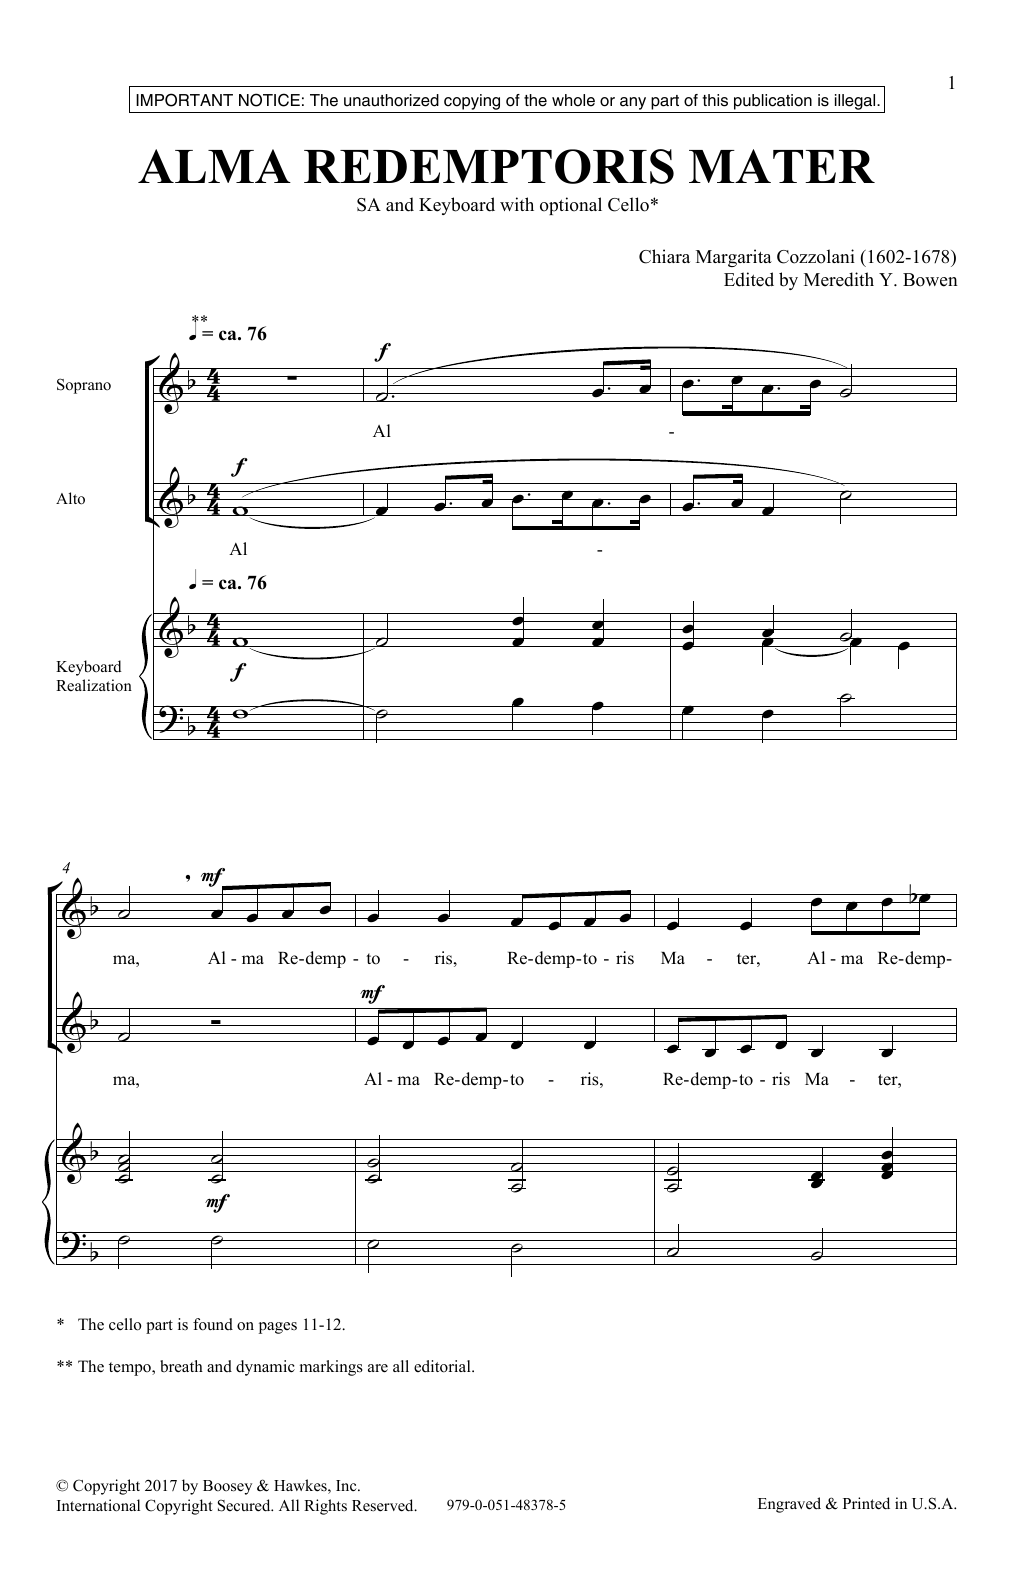 Download Meredith Y. Bowen Alma Redemptoris Mater Sheet Music